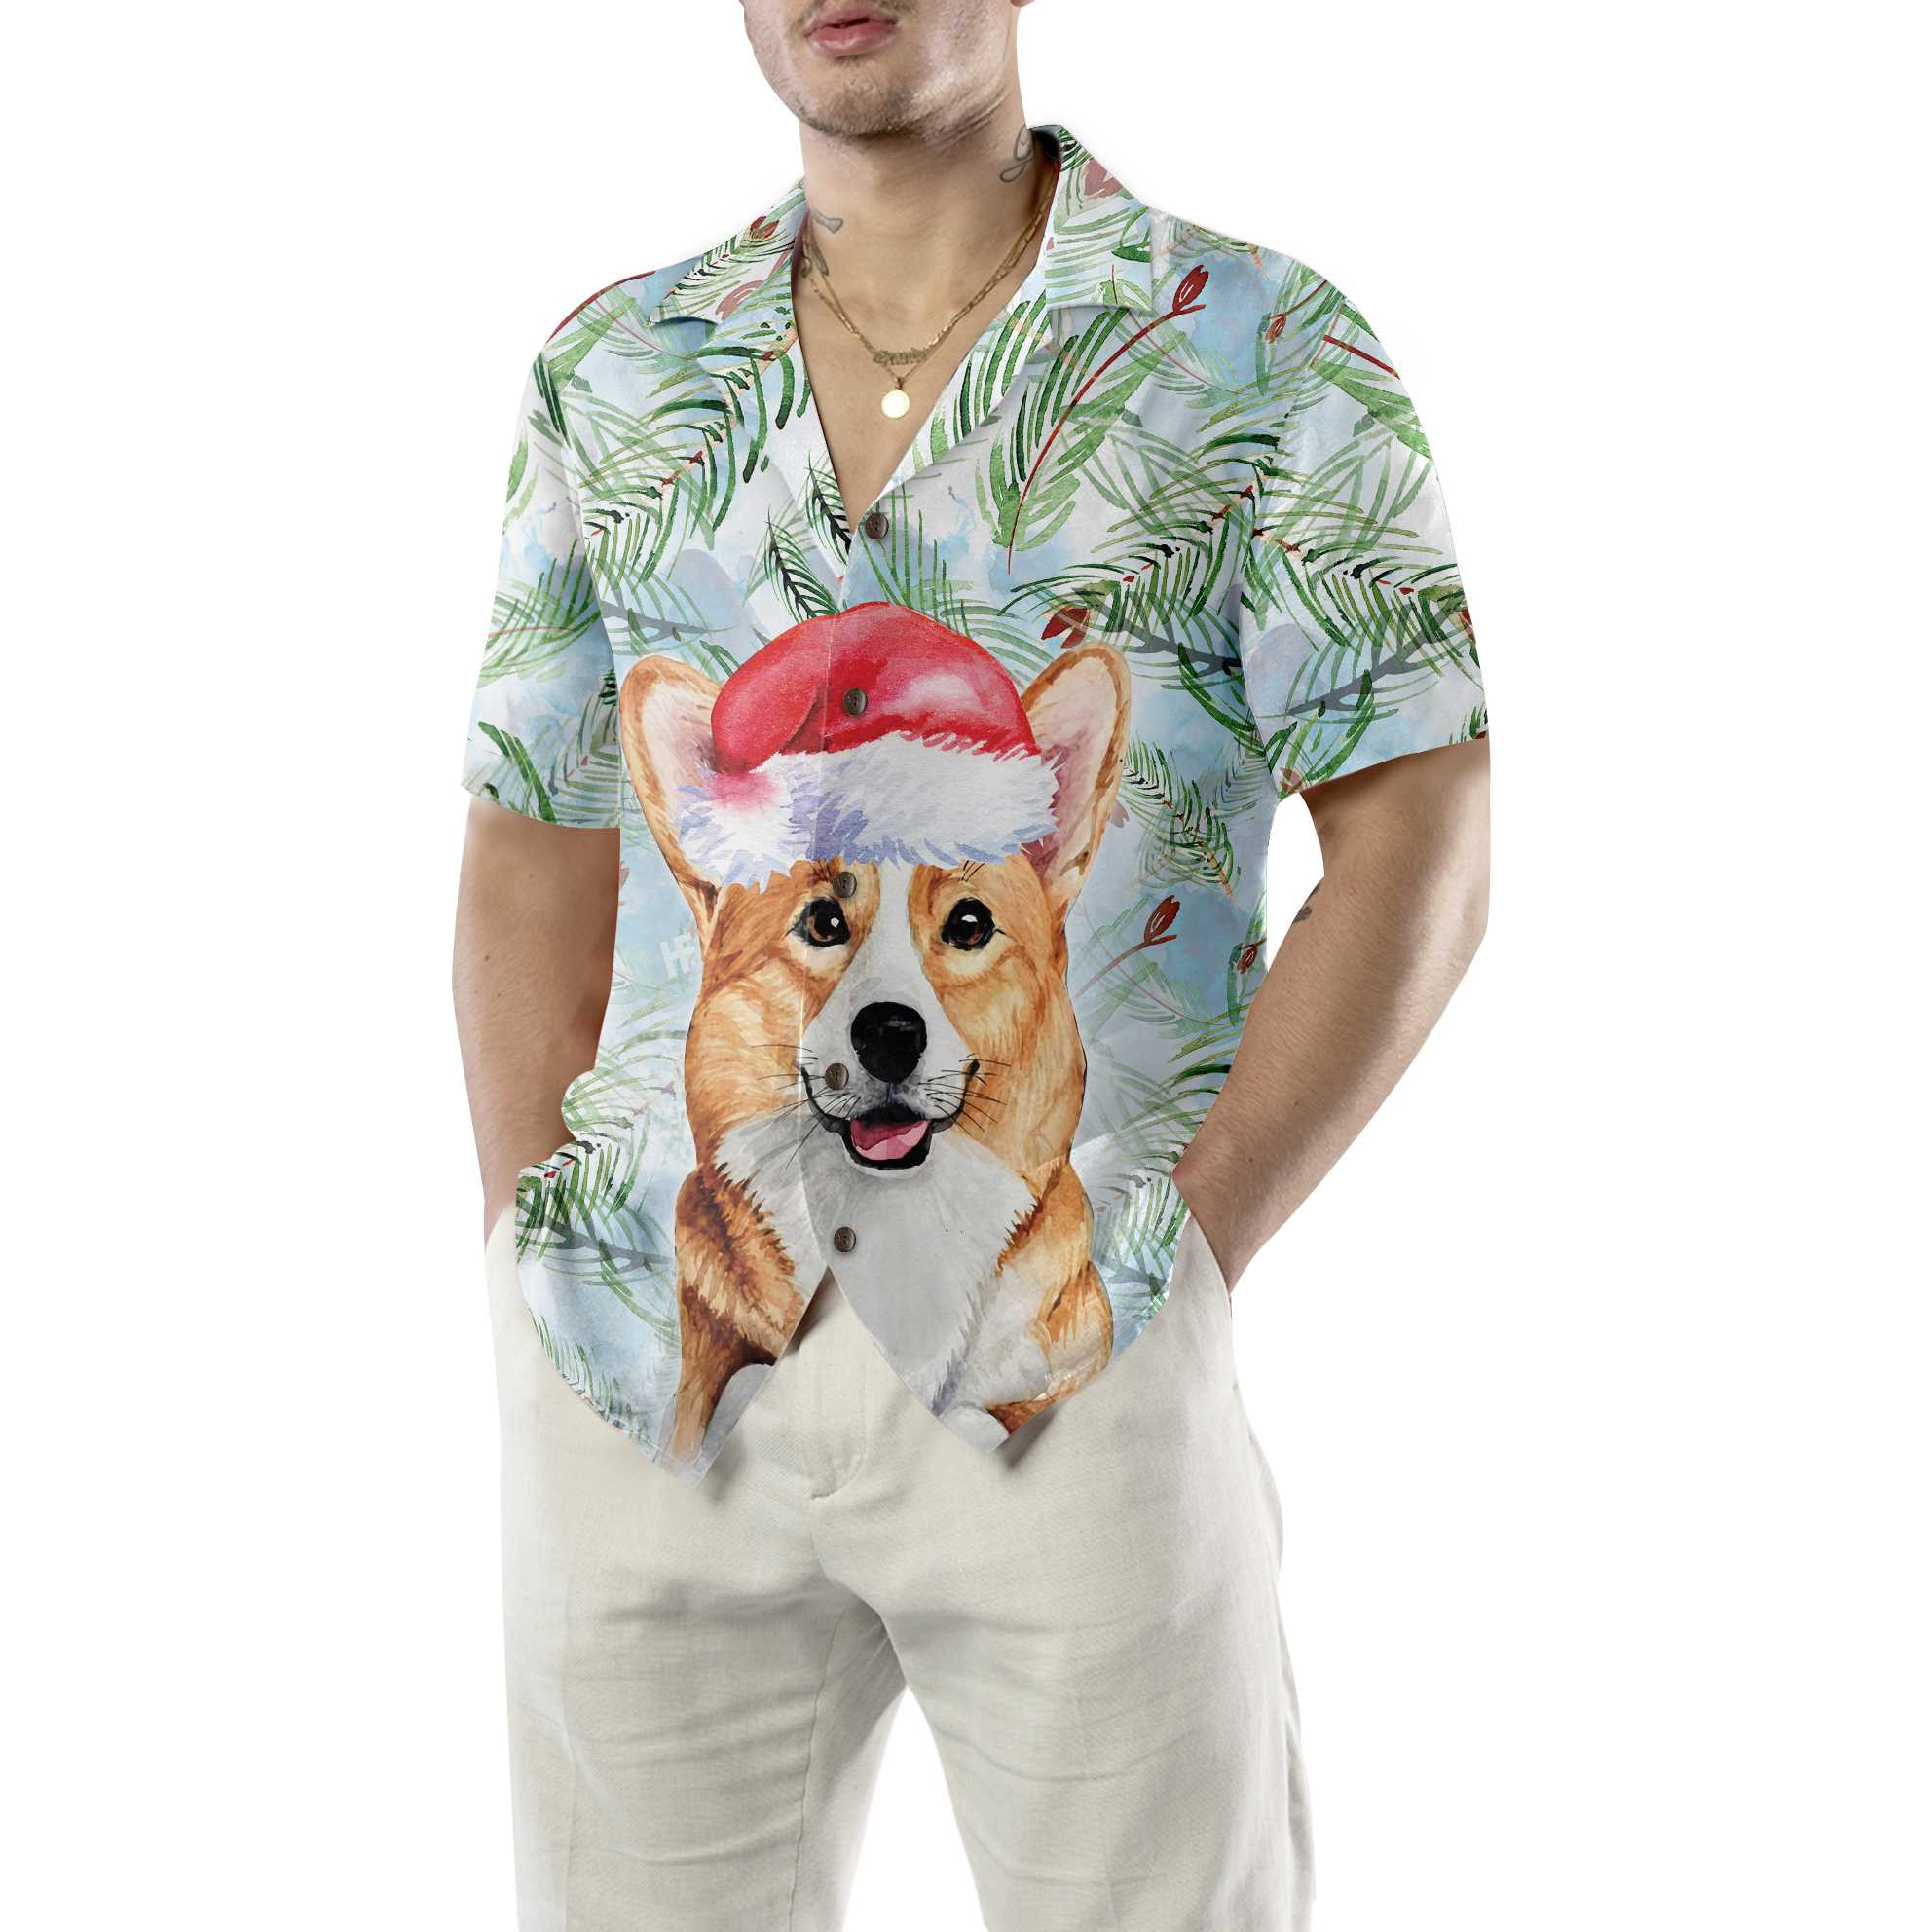 Corgi With Christmas Fir Branches Pattern Hawaiian Shirt, Corgi Christmas Shirt, Best Christmas Gift Idea